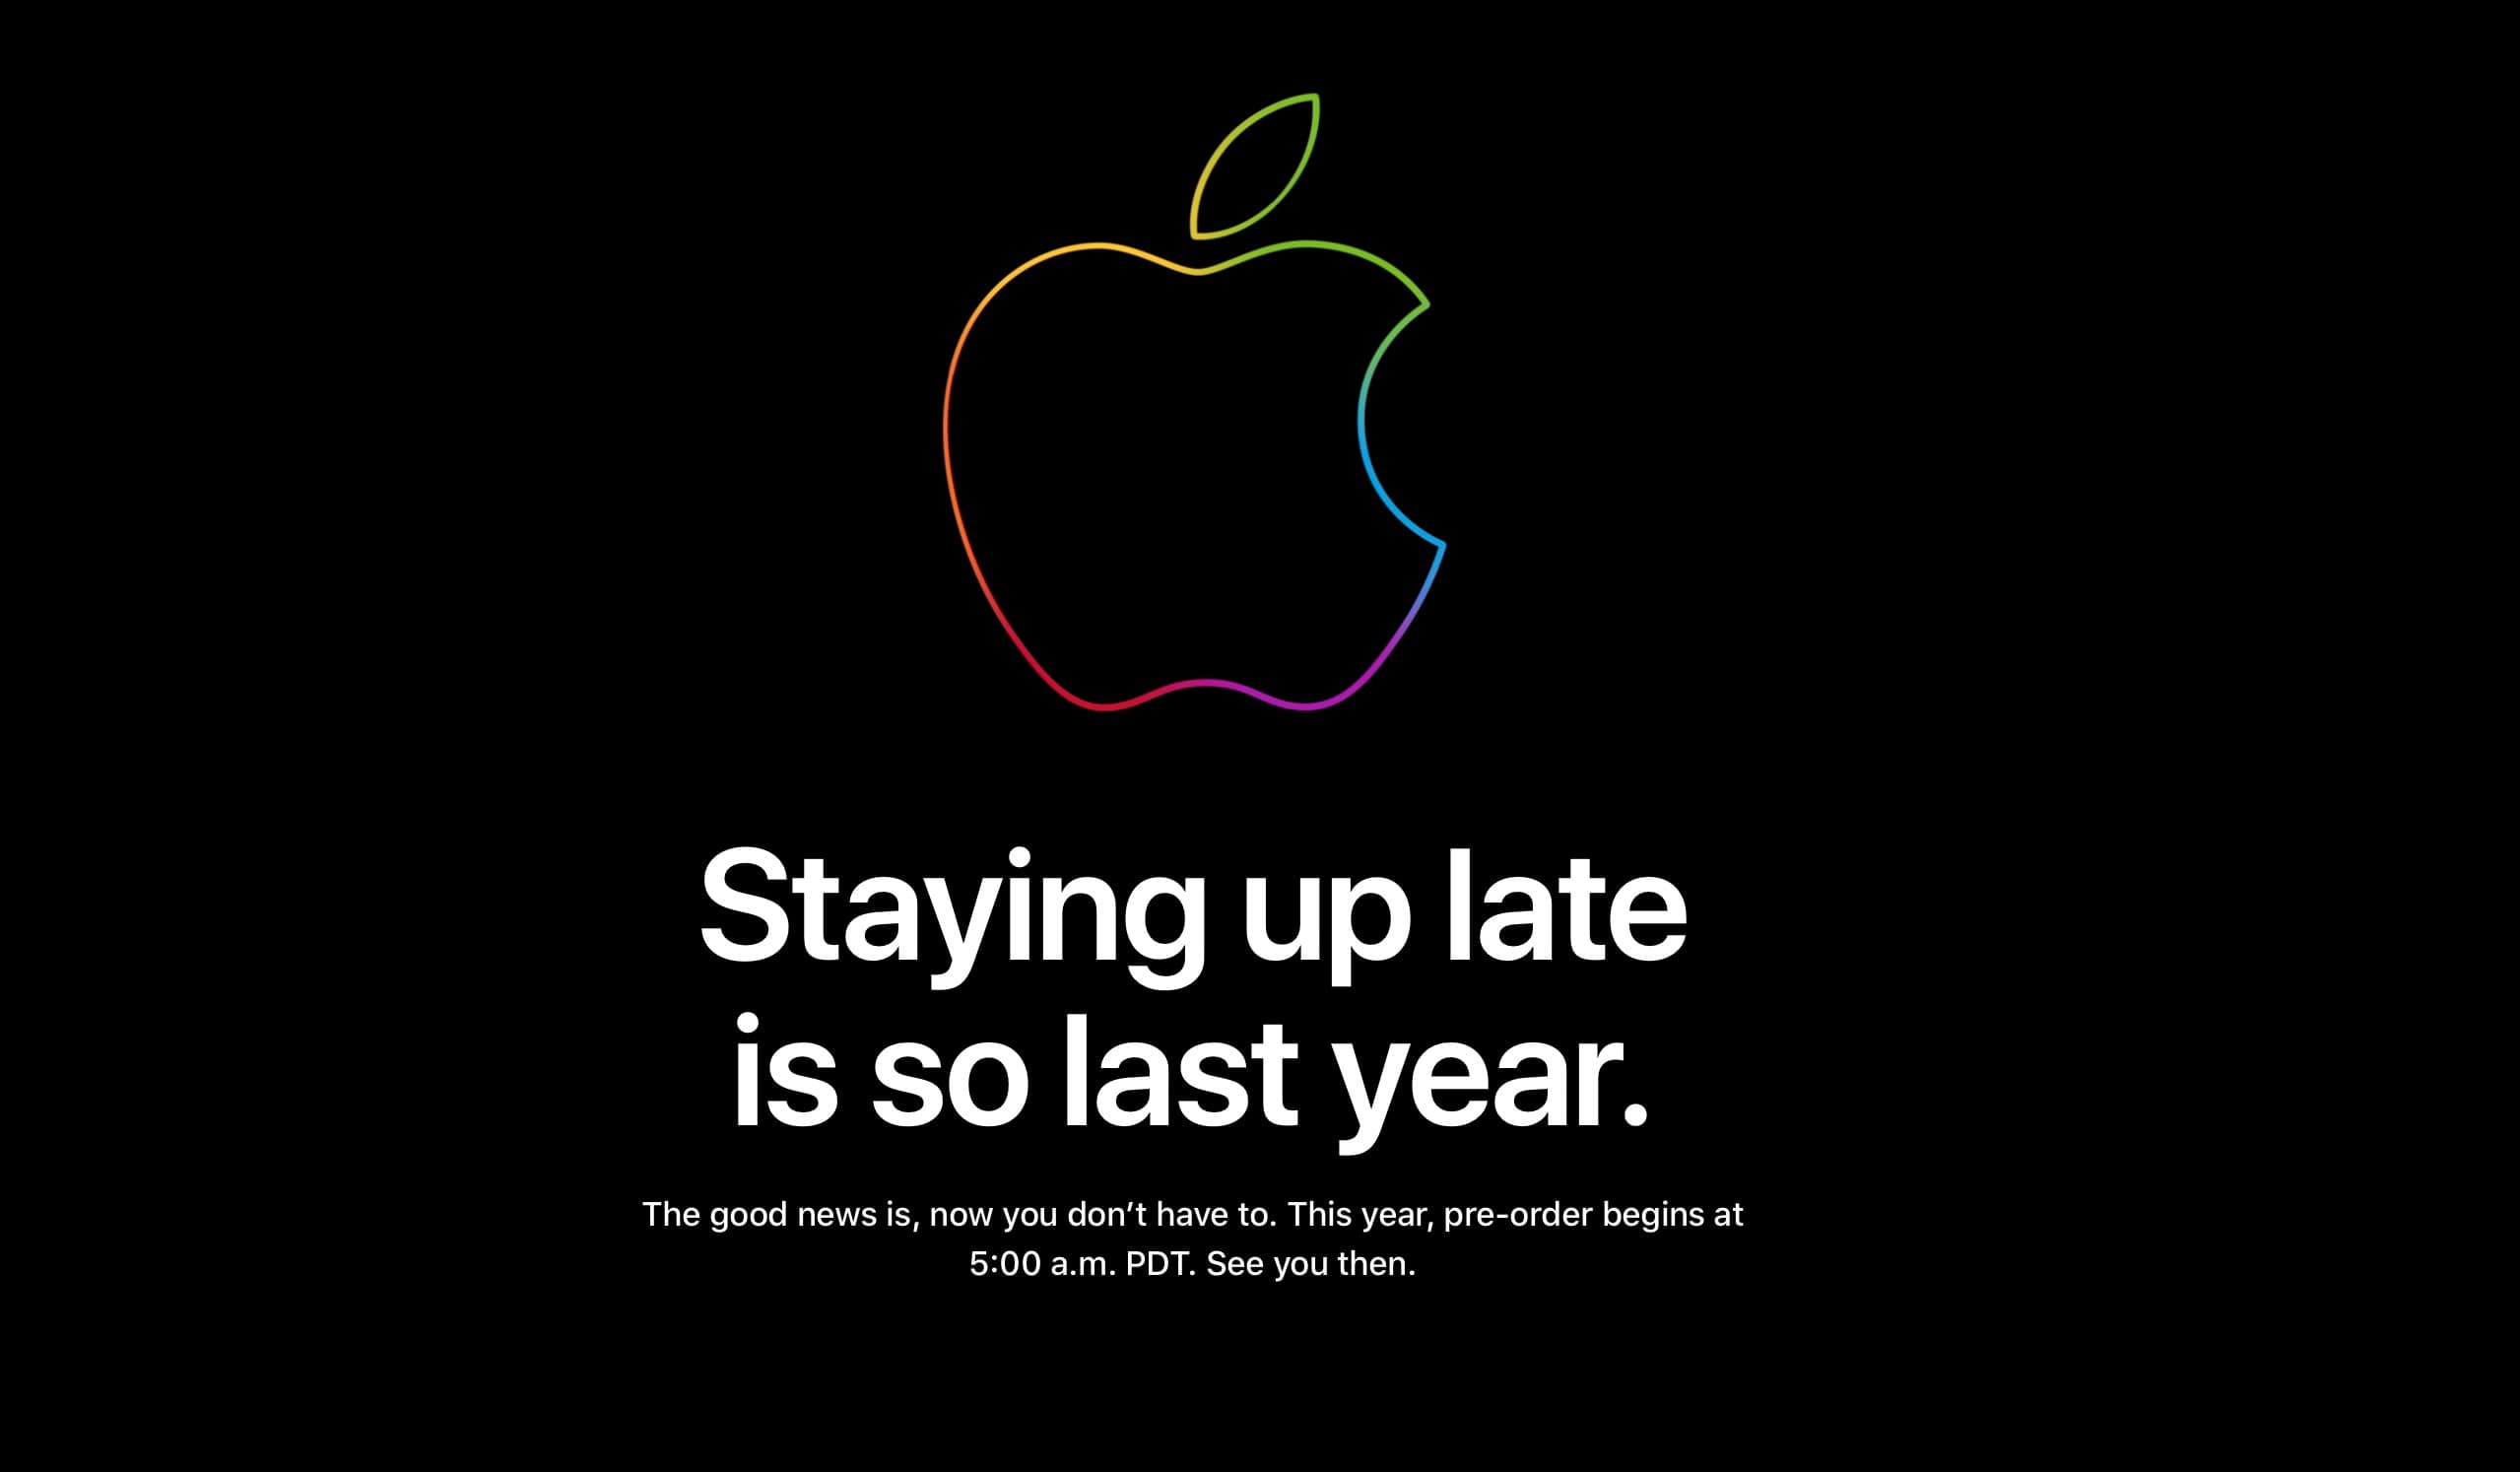 Apple Online Store Down ahead of 5:00 AM iPhone 11 Preorders